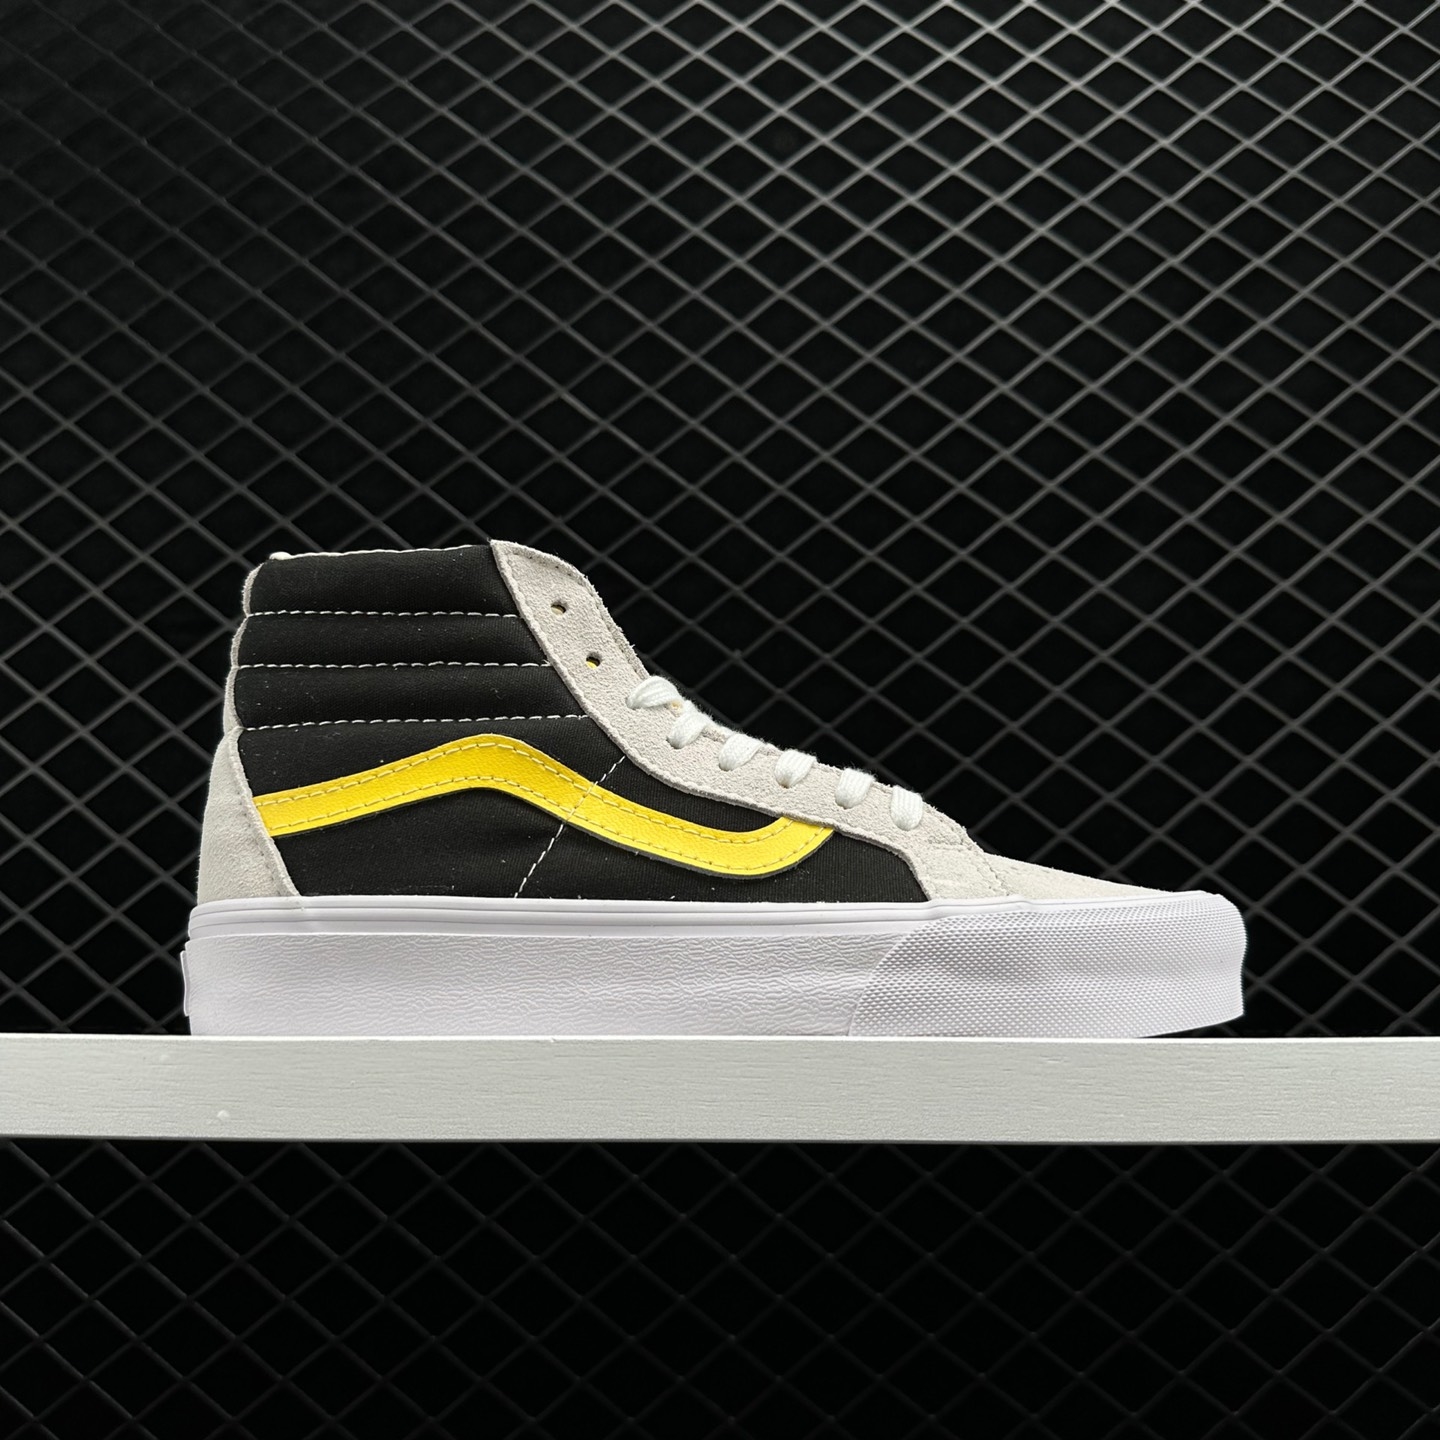 Vans SK8-HI Reissue VLT LX 'White Black' VN0A4BVHA0I - Sleek and Stylish Skate Shoes